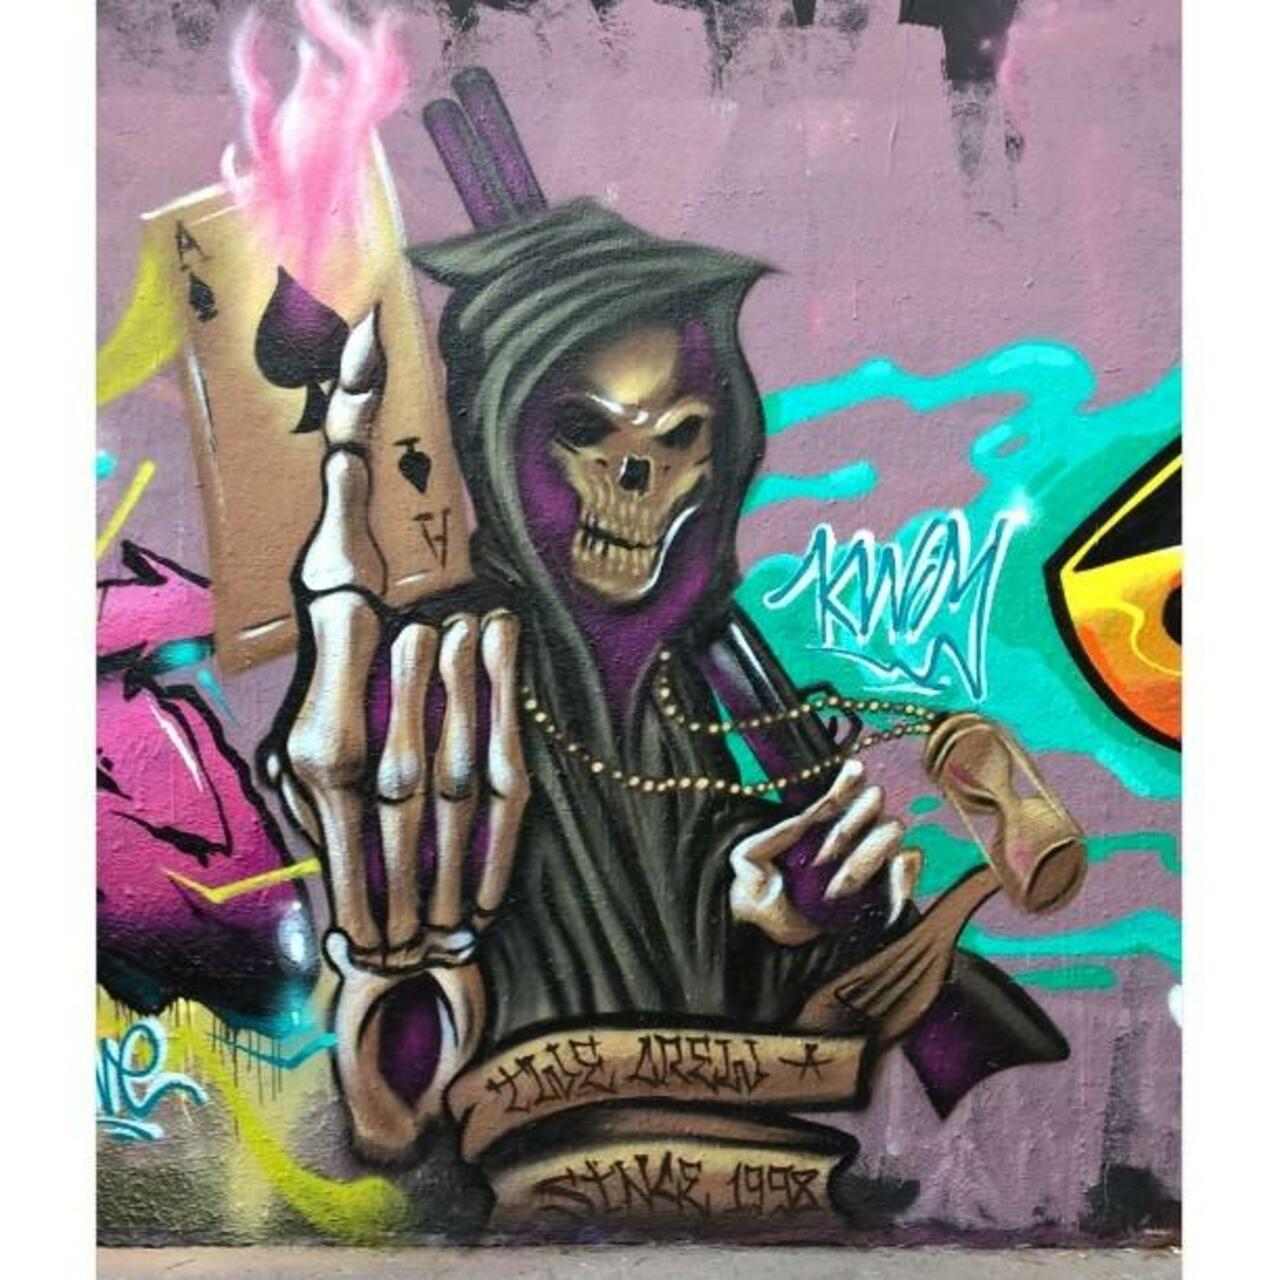 RT @StArtEverywhere: KWIM
#TWEcrew #streetart #graffiti #graff #art #fatcap #bombing #sprayart #spraycanart #wallart #handstyle #letteri… http://t.co/eKFkgBttGs